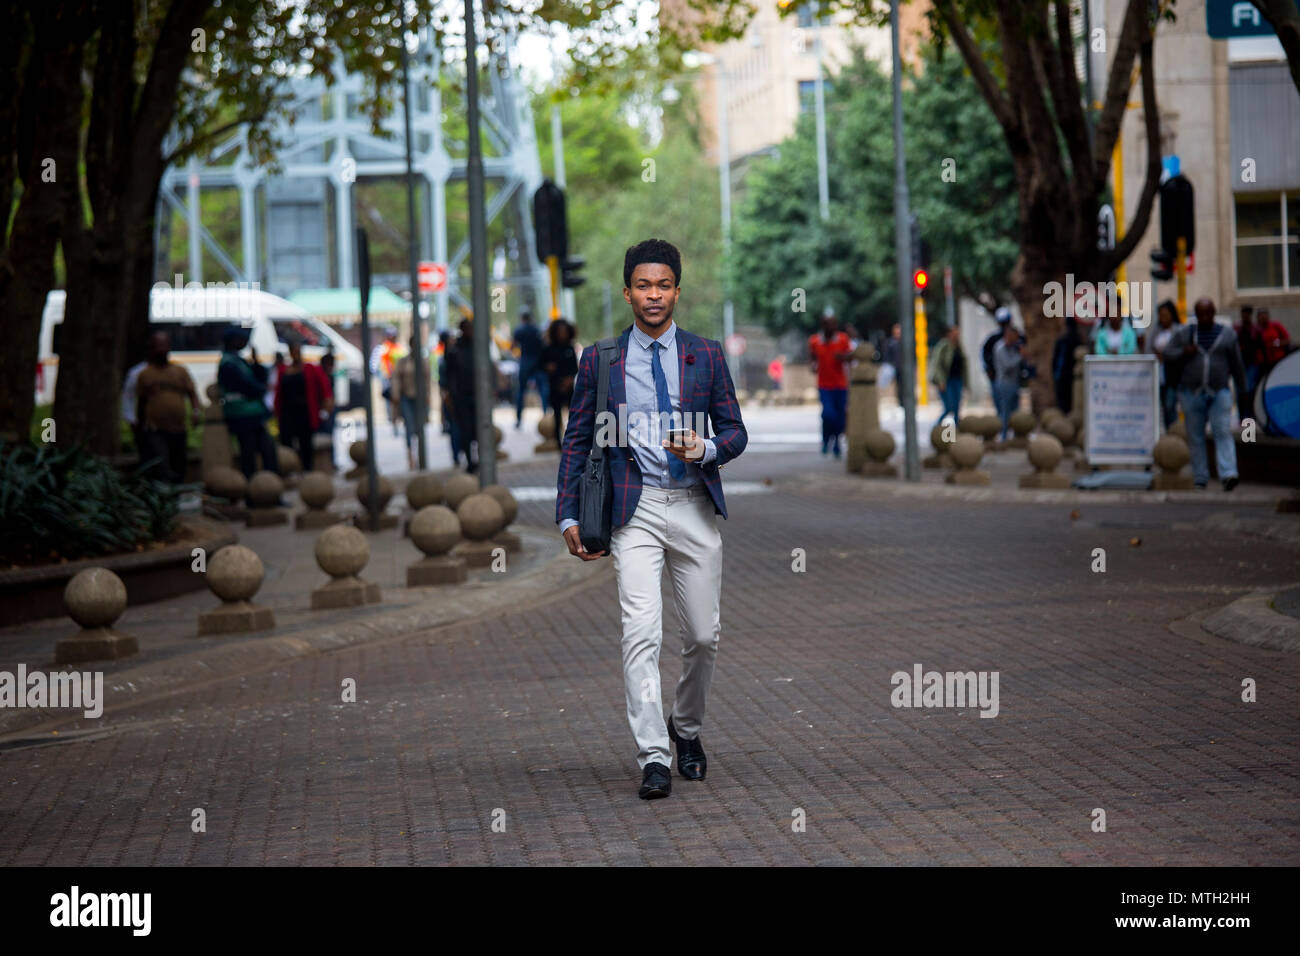 Business man walking through city Stock Photo